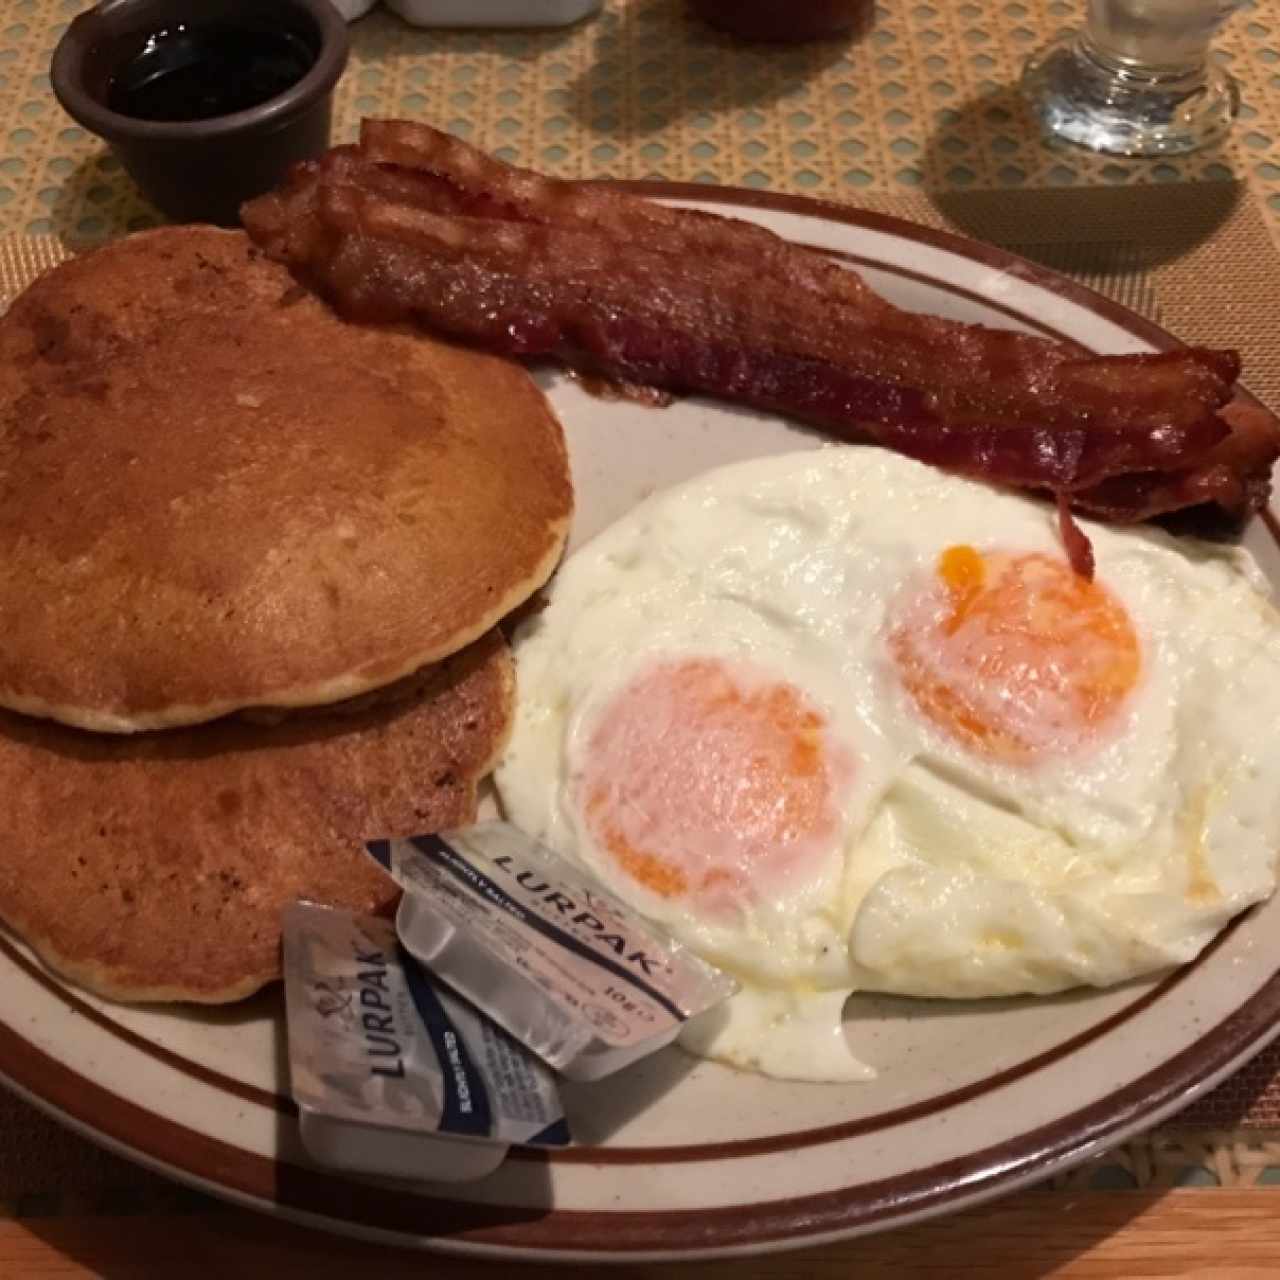 Desayuno con pancakes